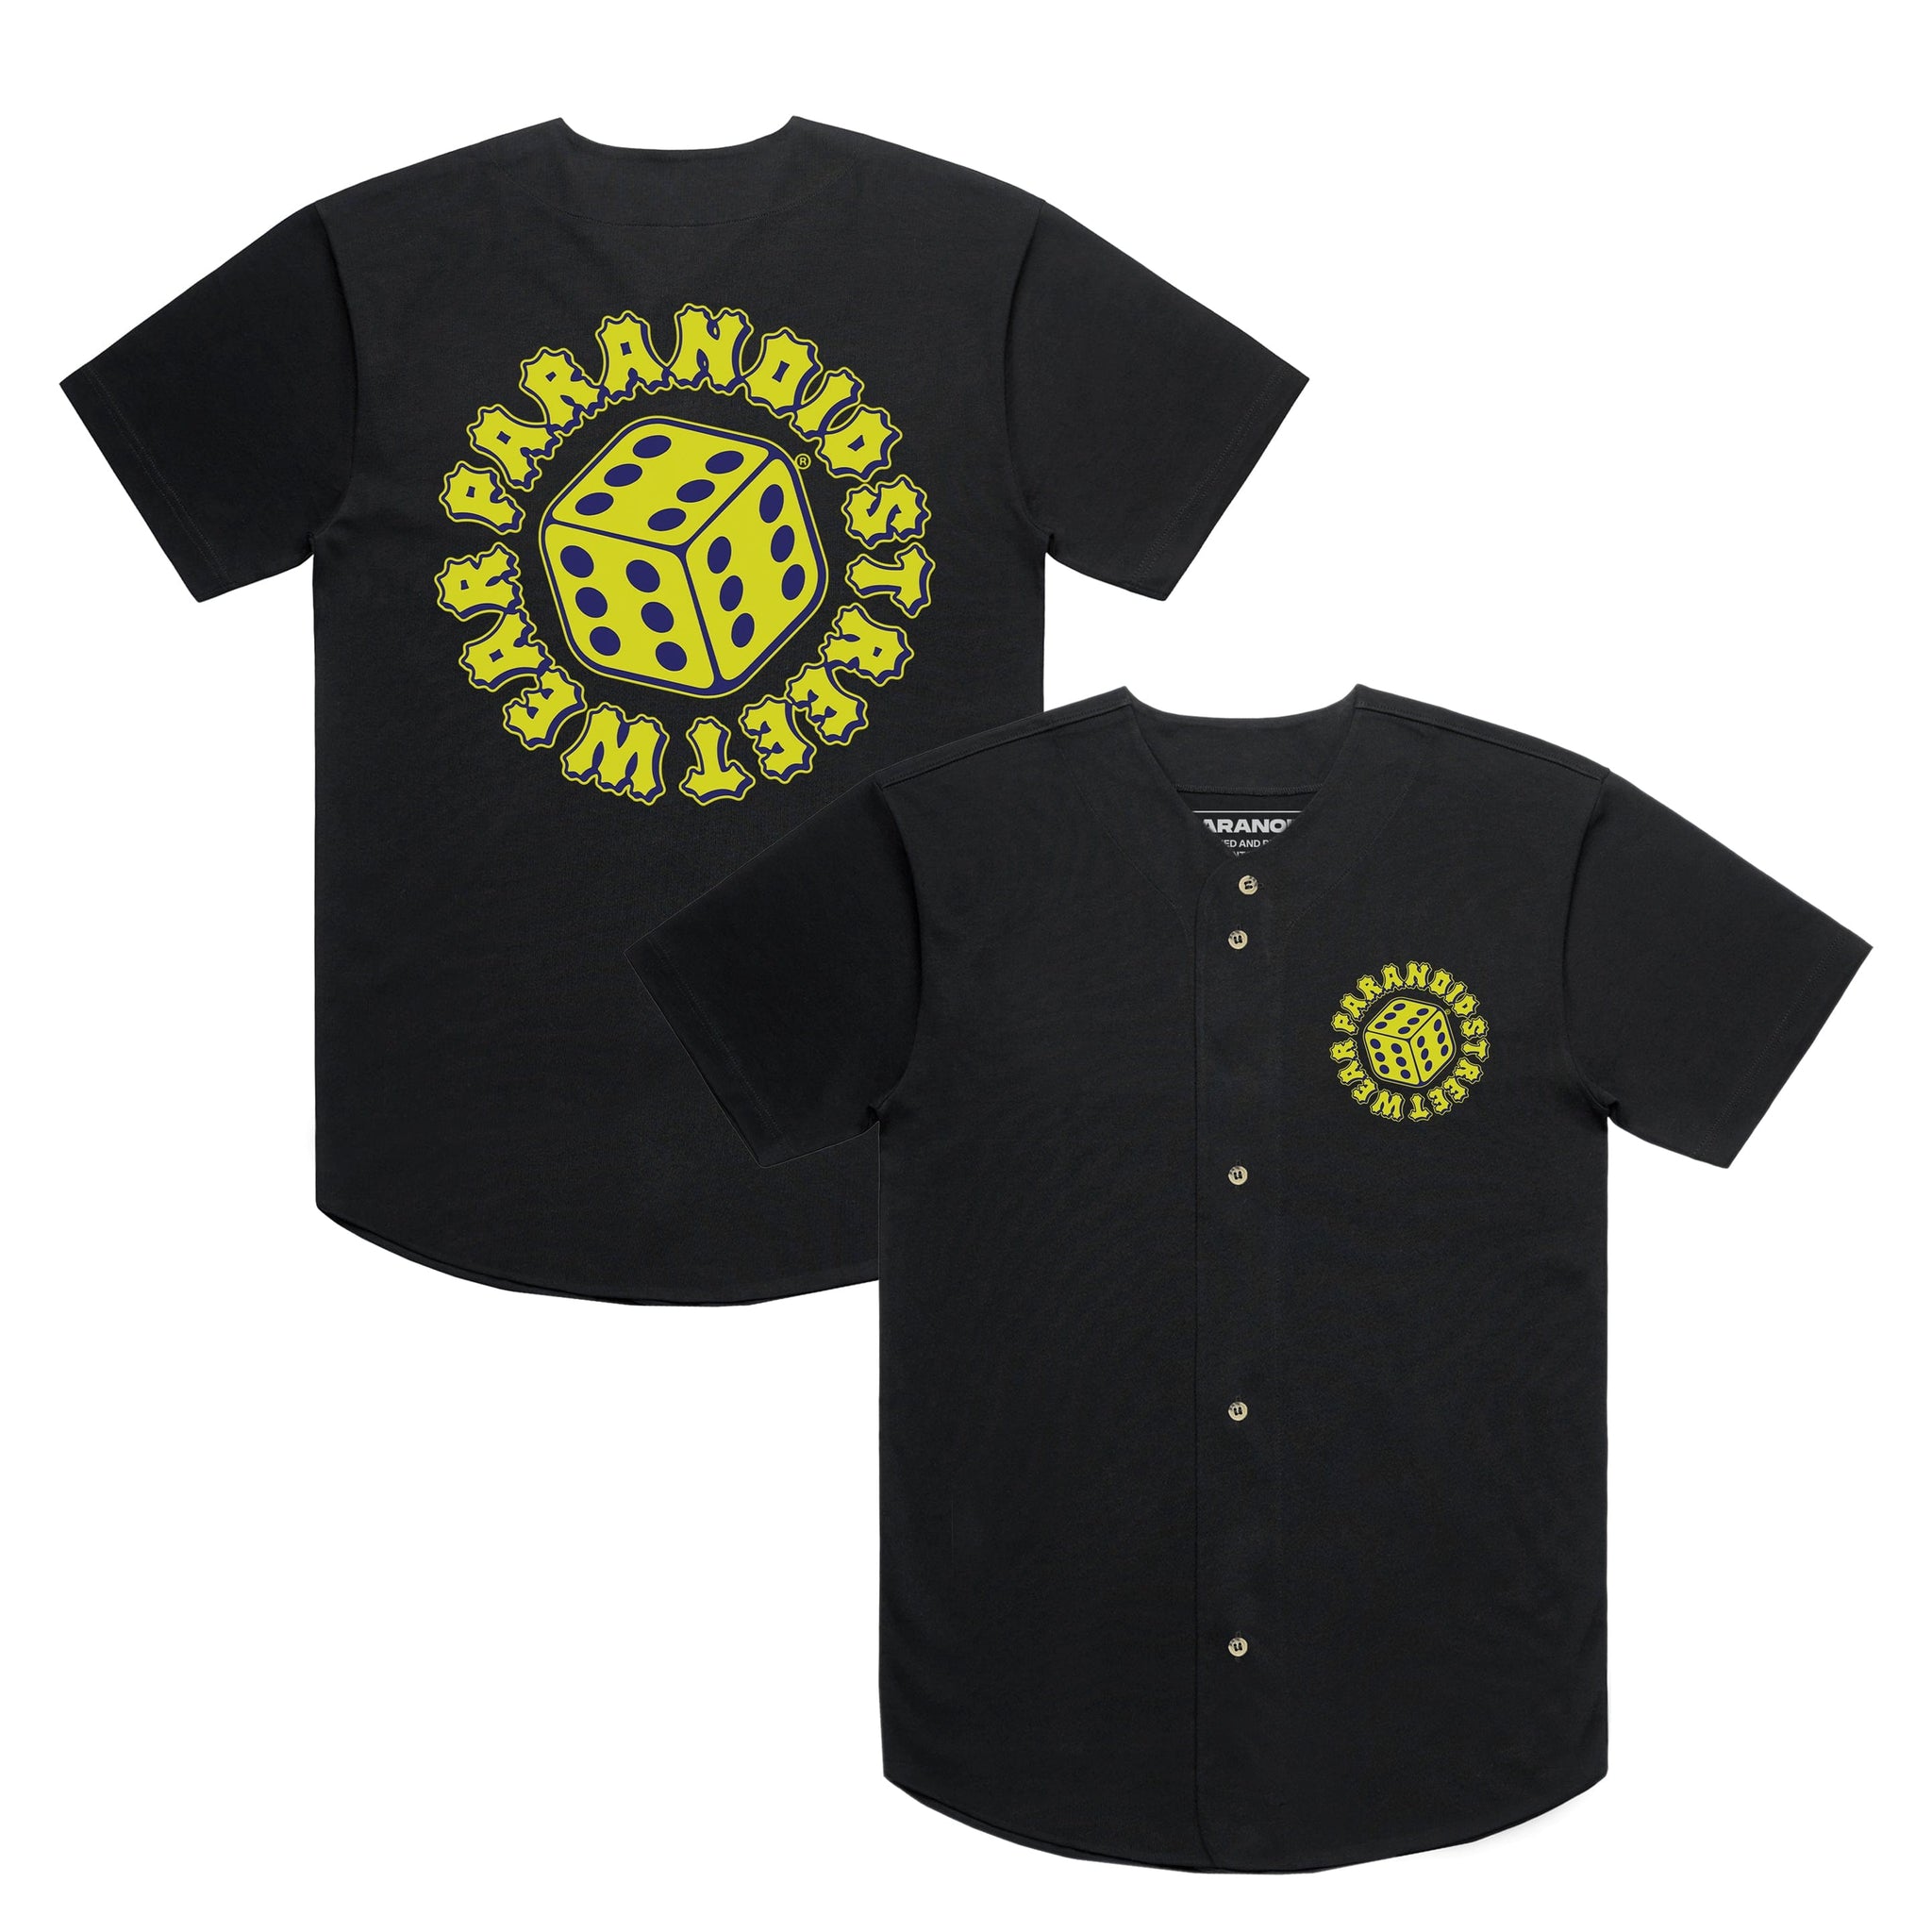 Control Freak - T-shirts - Paranoid Hearts Clothing, Clothing Brand